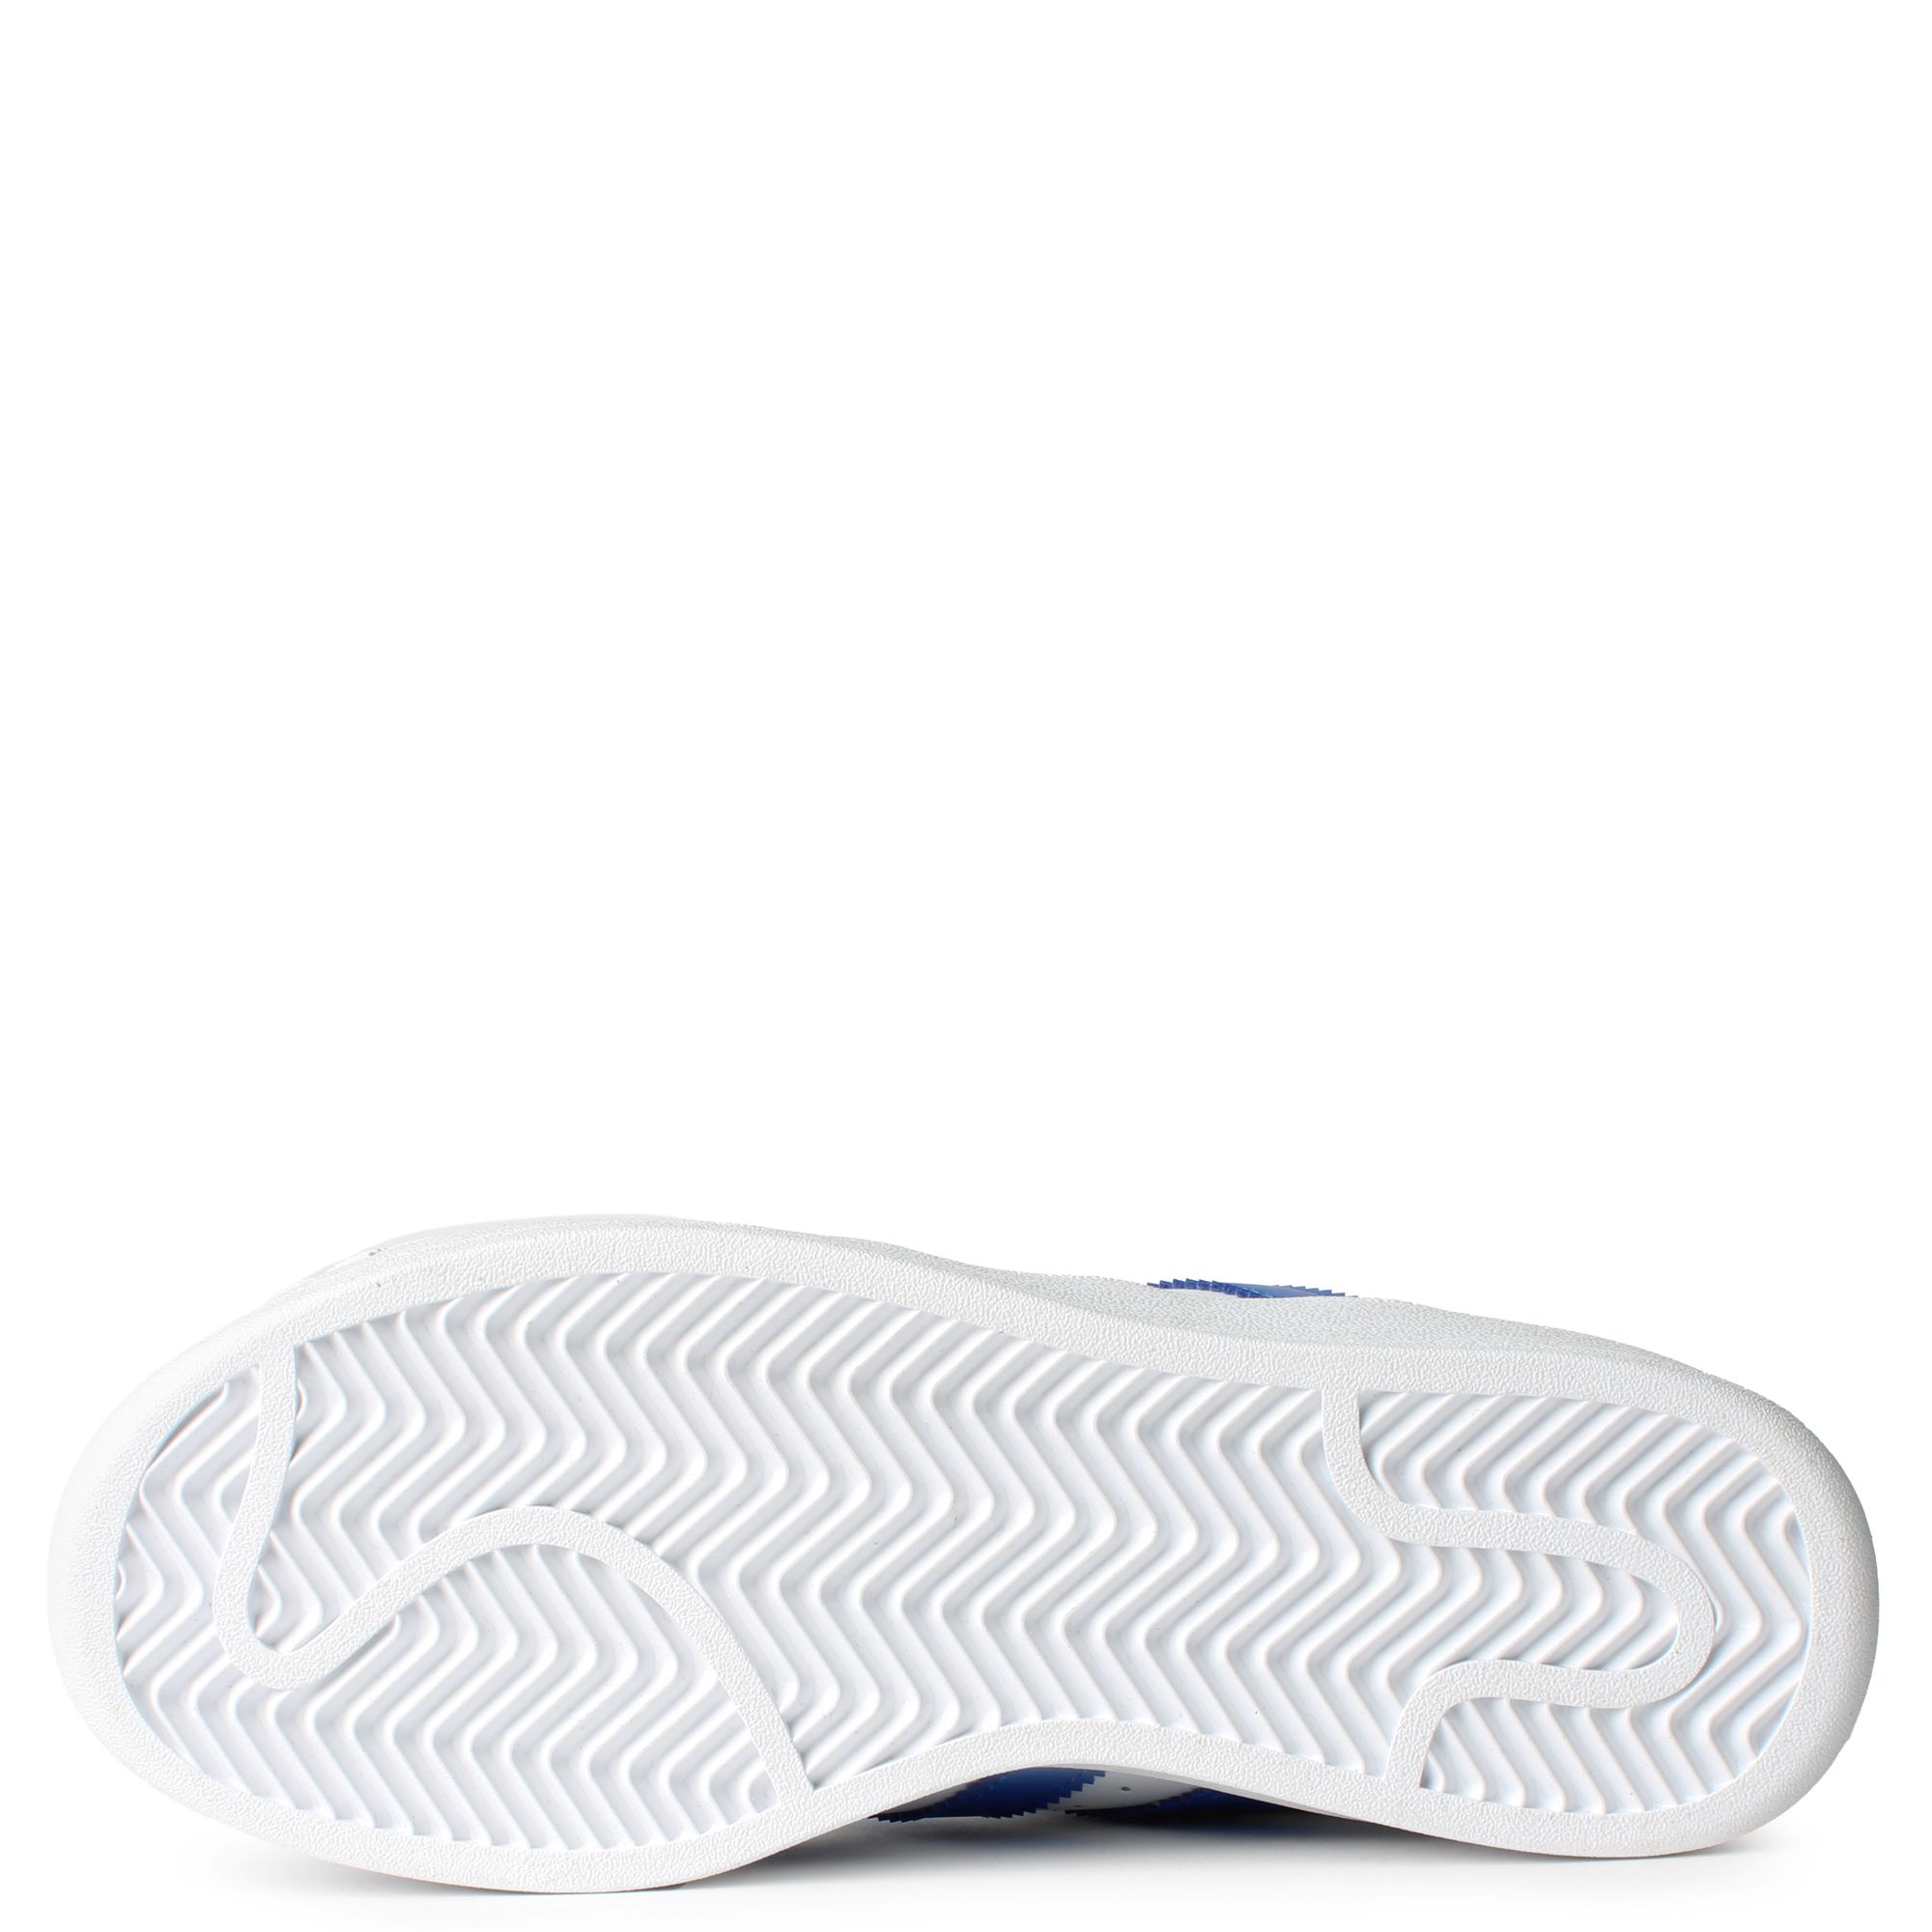 Baskets Femme Superstar F33889 Footwear White